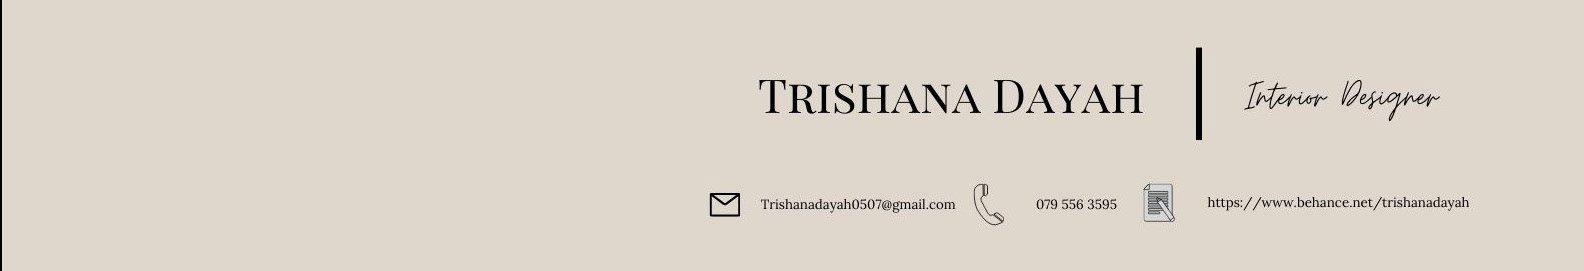 Banner de perfil de Trishana Dayah